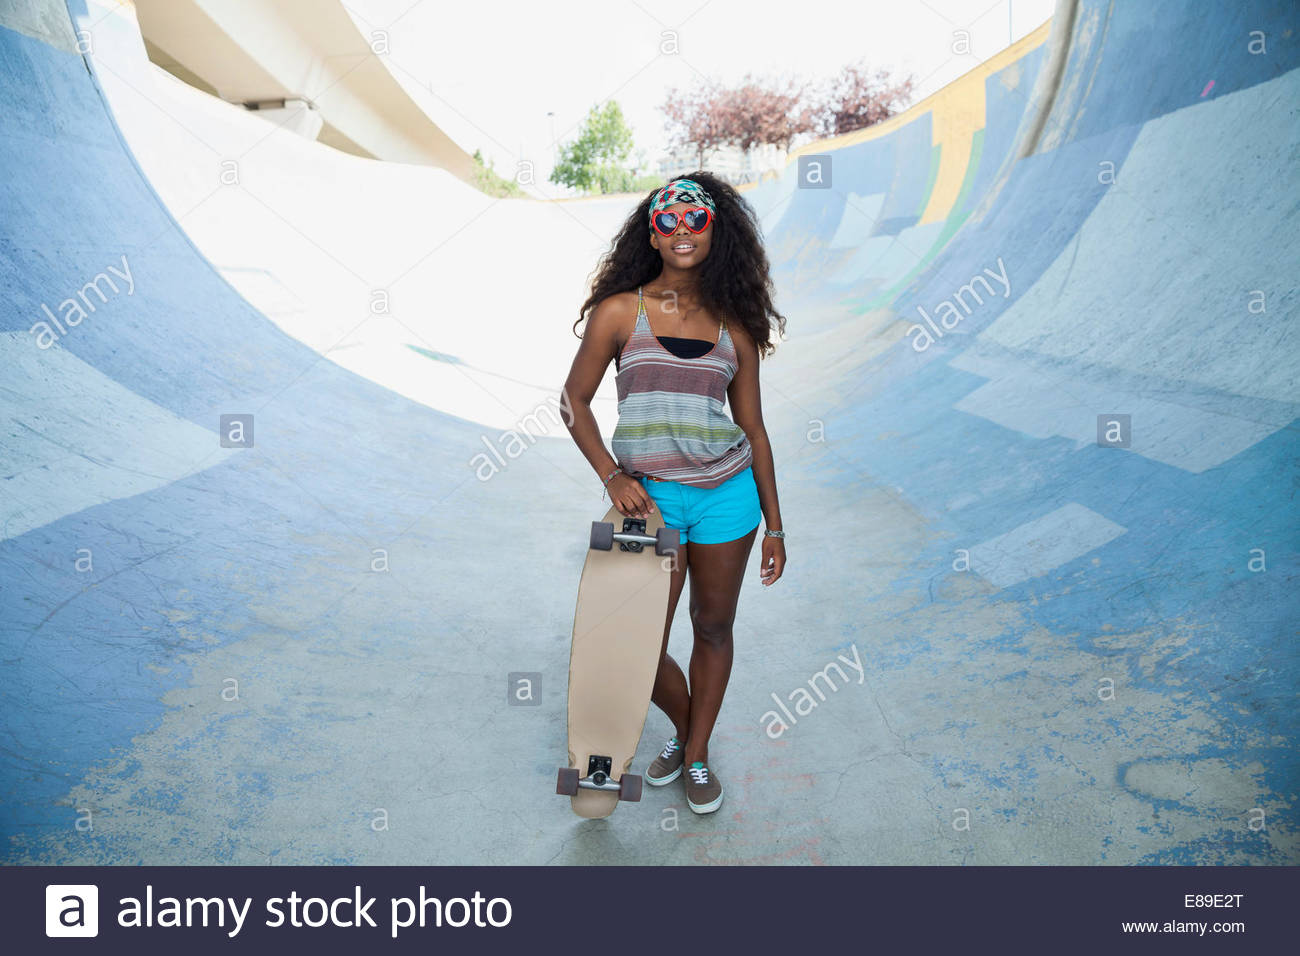 Portrait of teenage girl holding skateboard on ramp Stock Photo